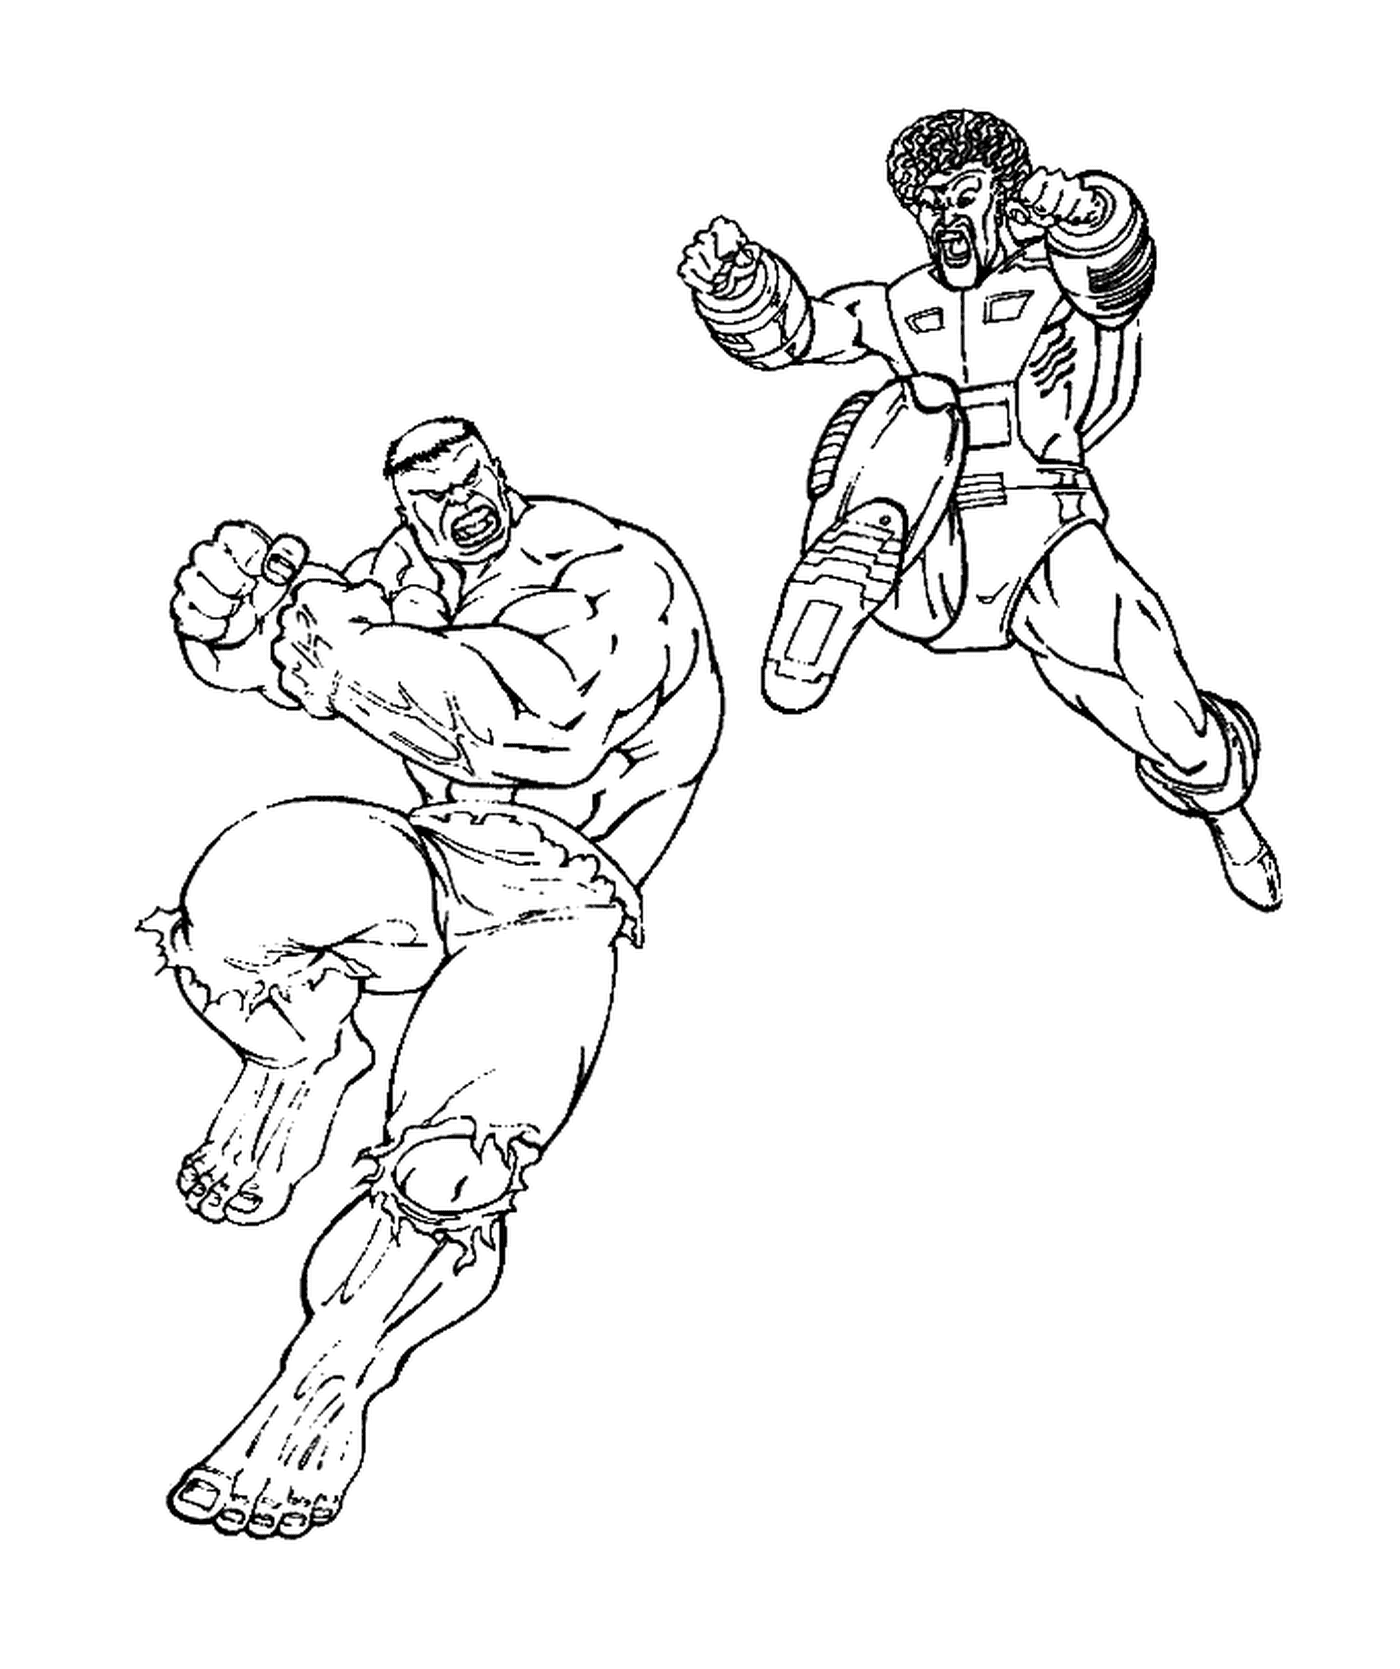  Hulk kämpft gegen einen bösen Kerl 